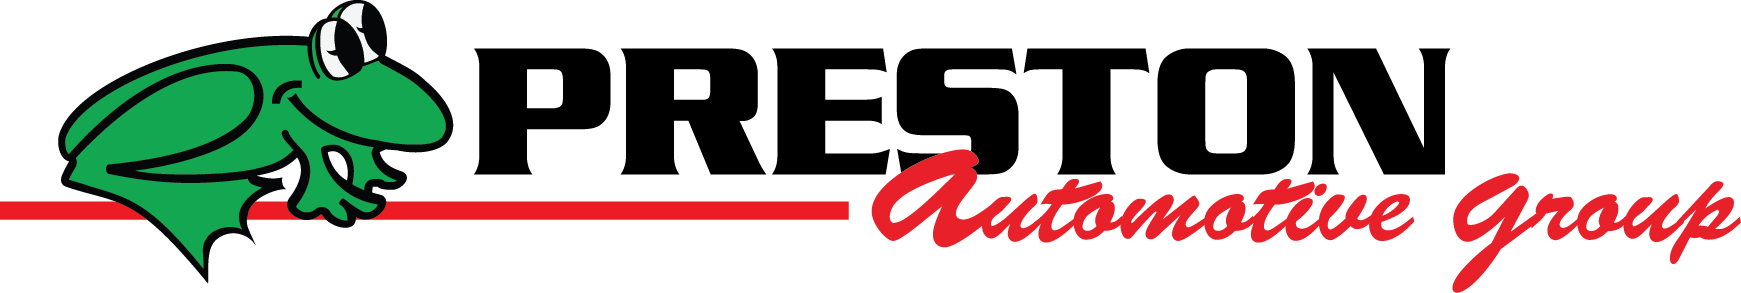 Preston Automotive Group logo